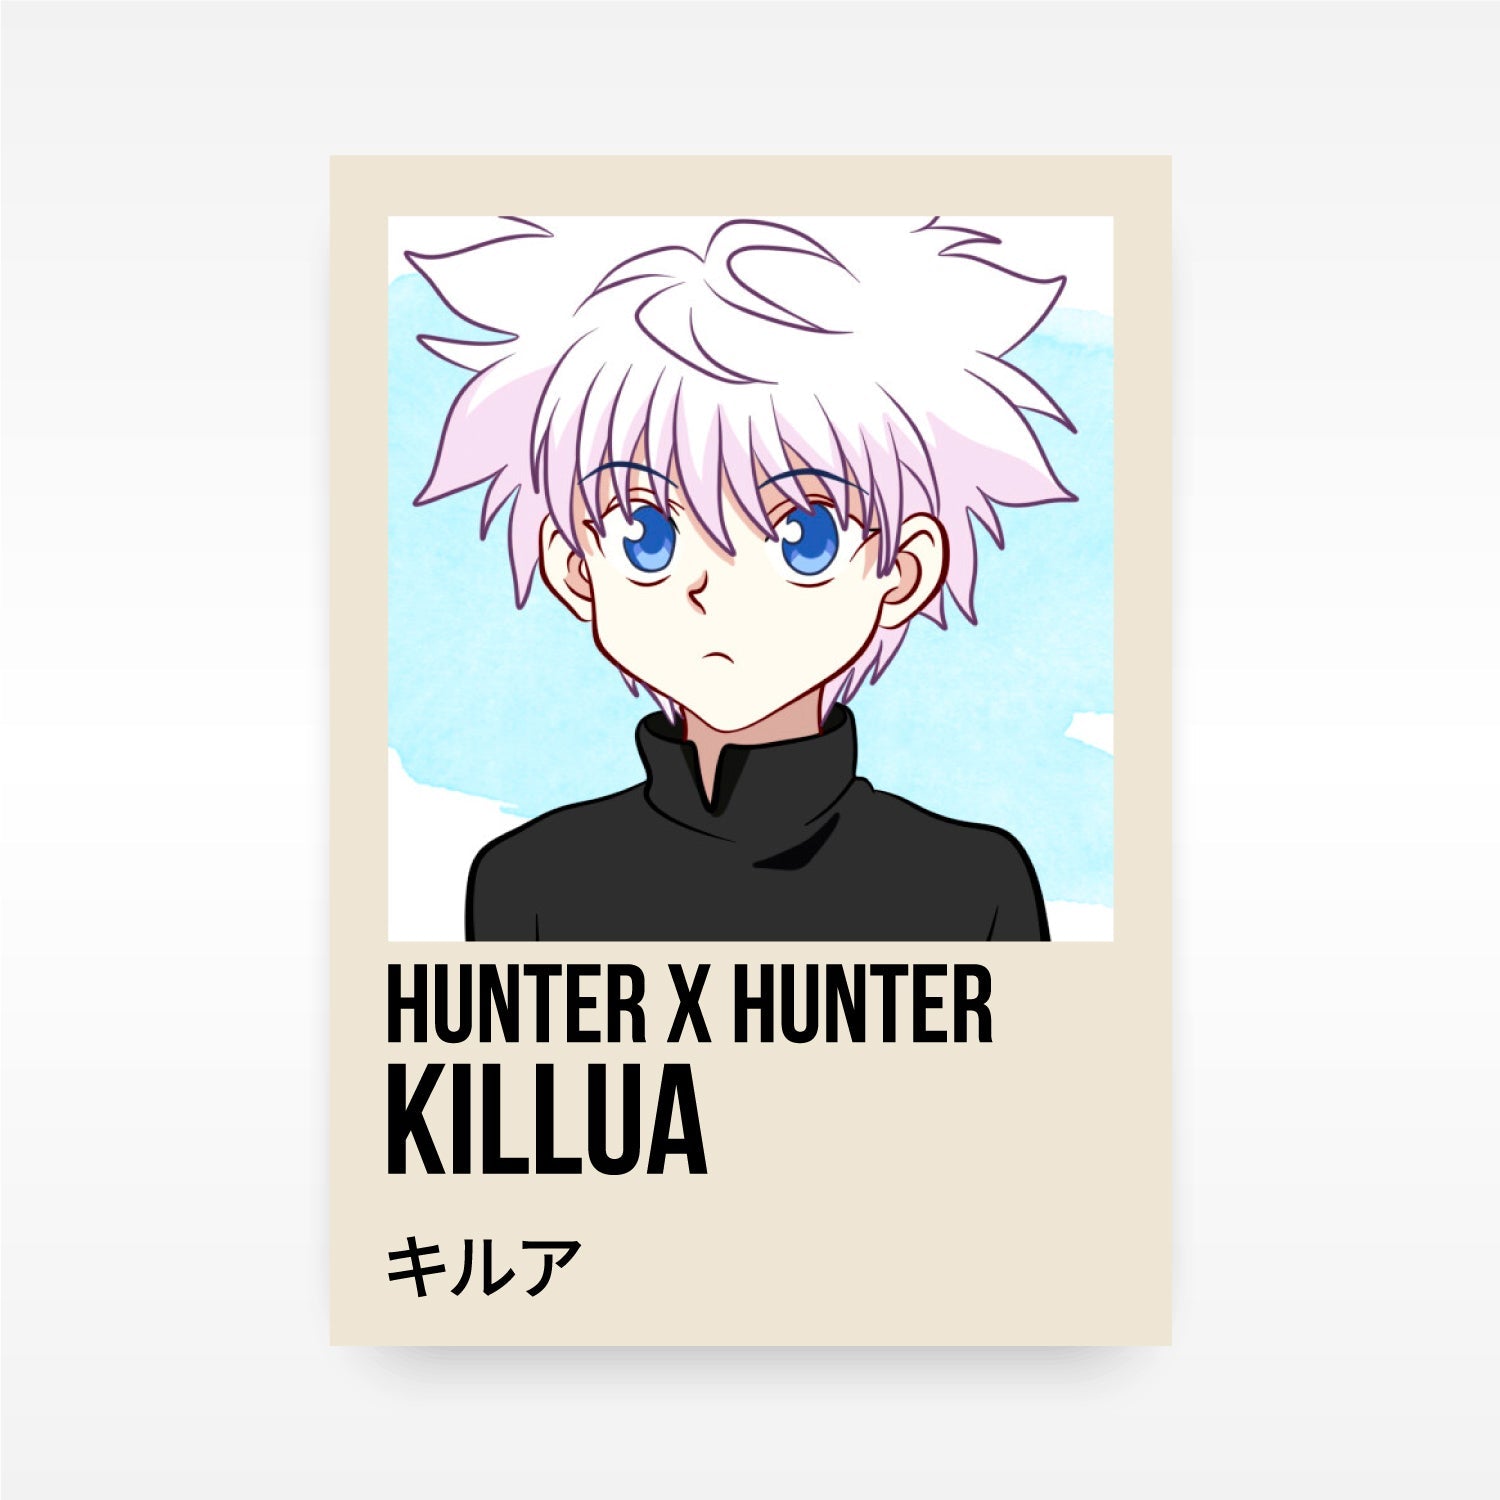 Curiosidades Animes - HunterXHunter Hunter X Hunter é um anime